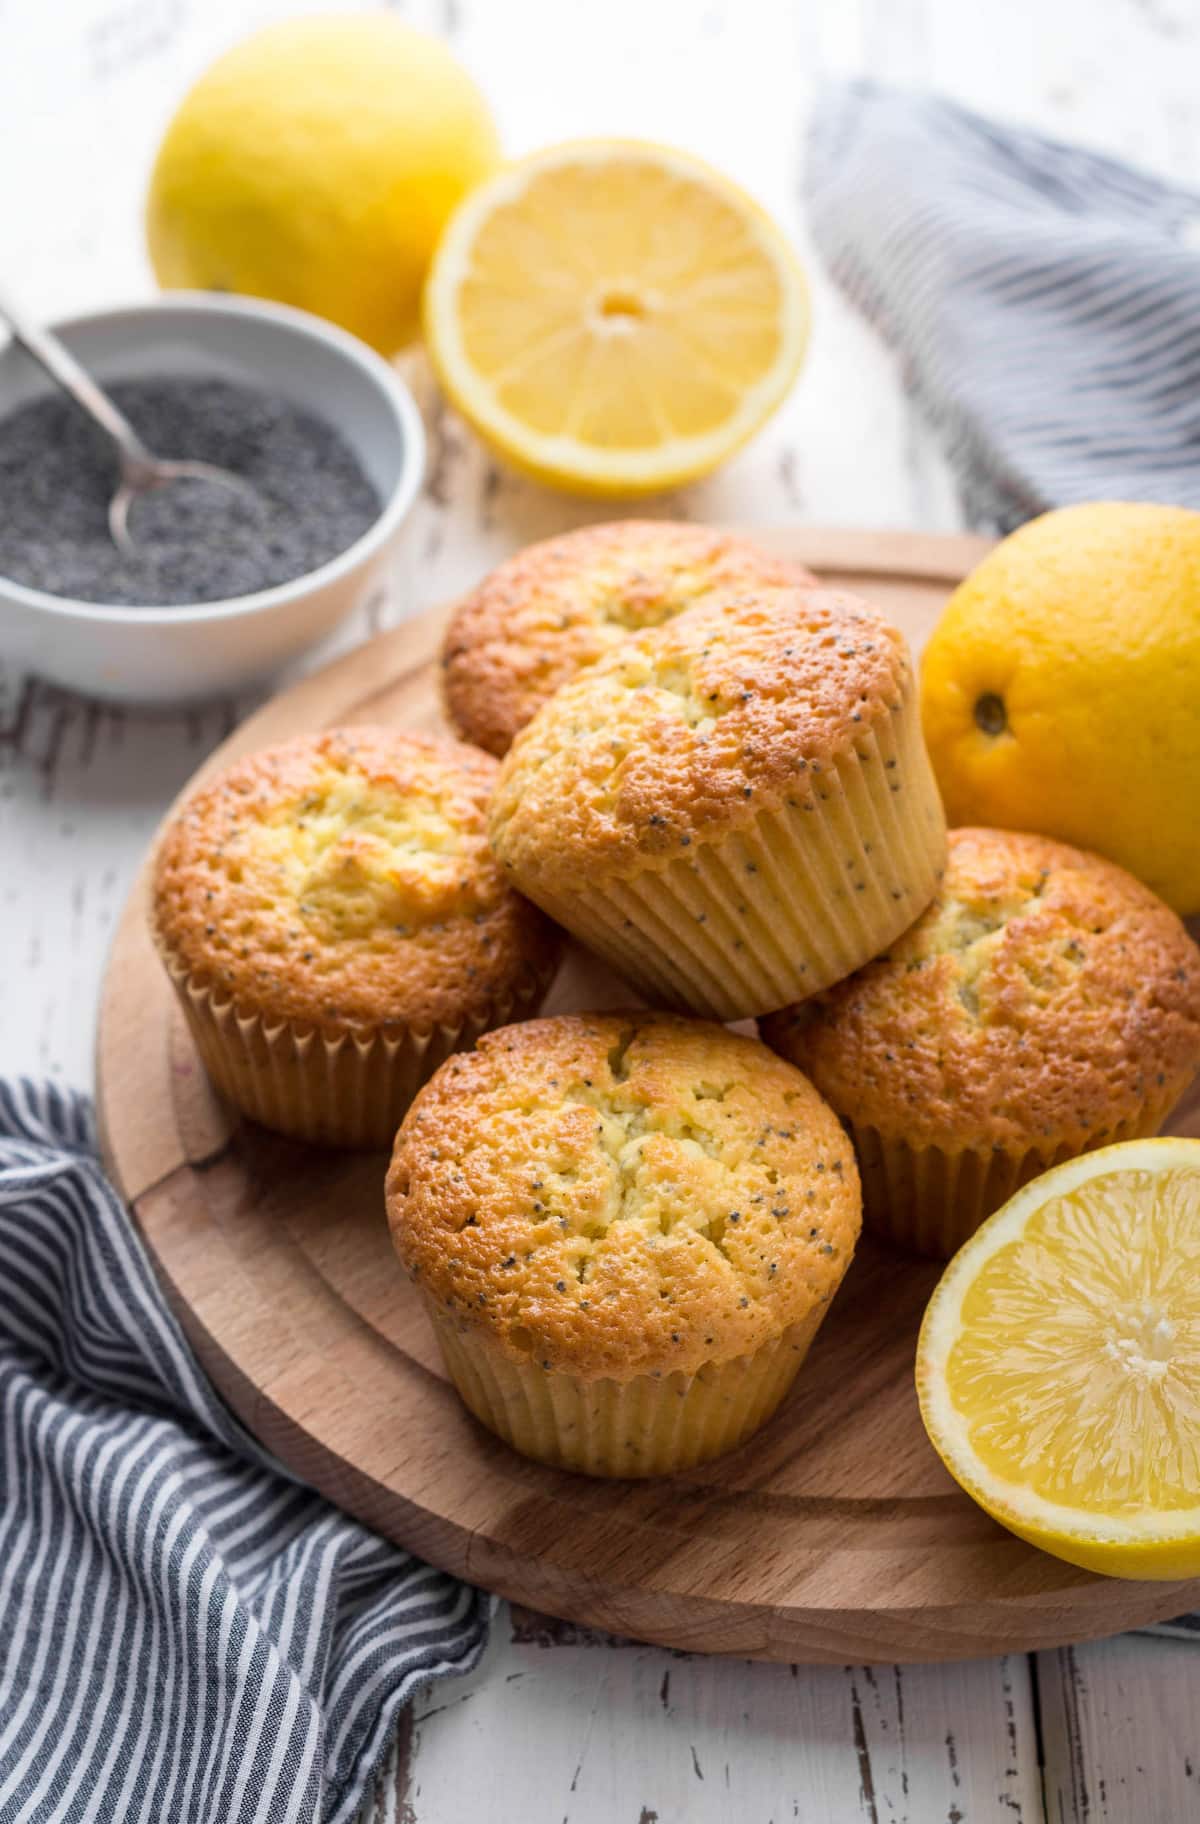 Vegan Lemon Poppy Seed Muffins on a tray ready to serve.